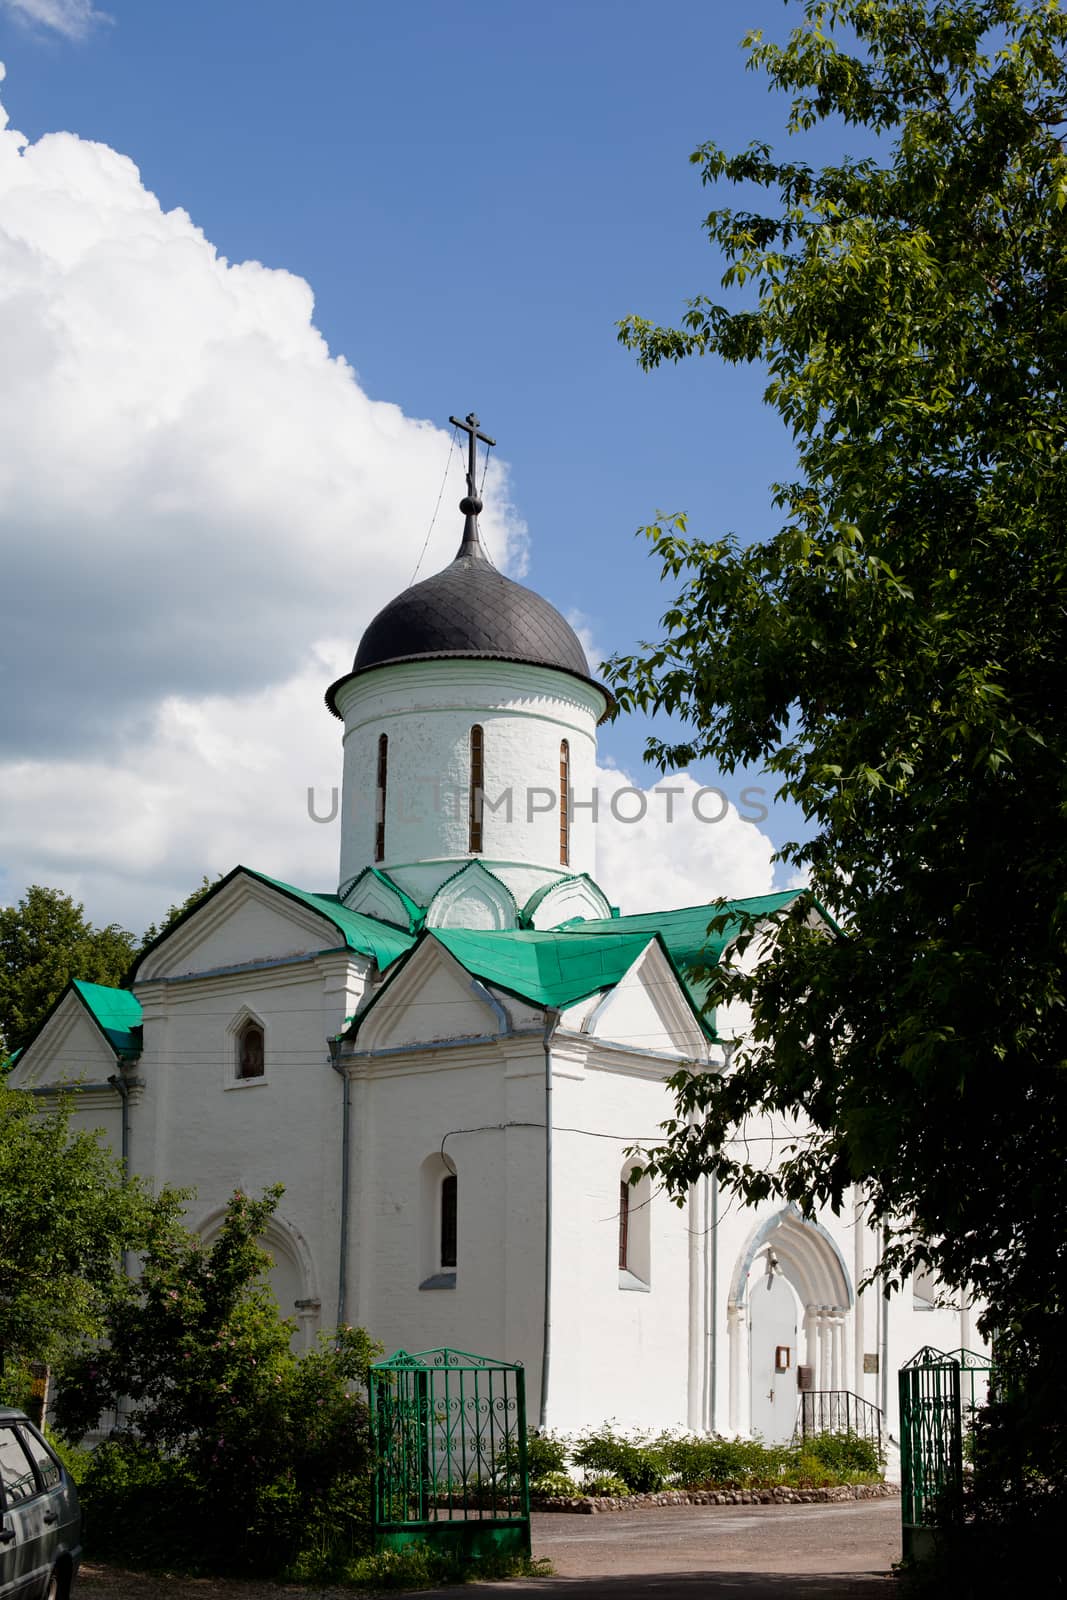 Small white orthodox church in a garden
